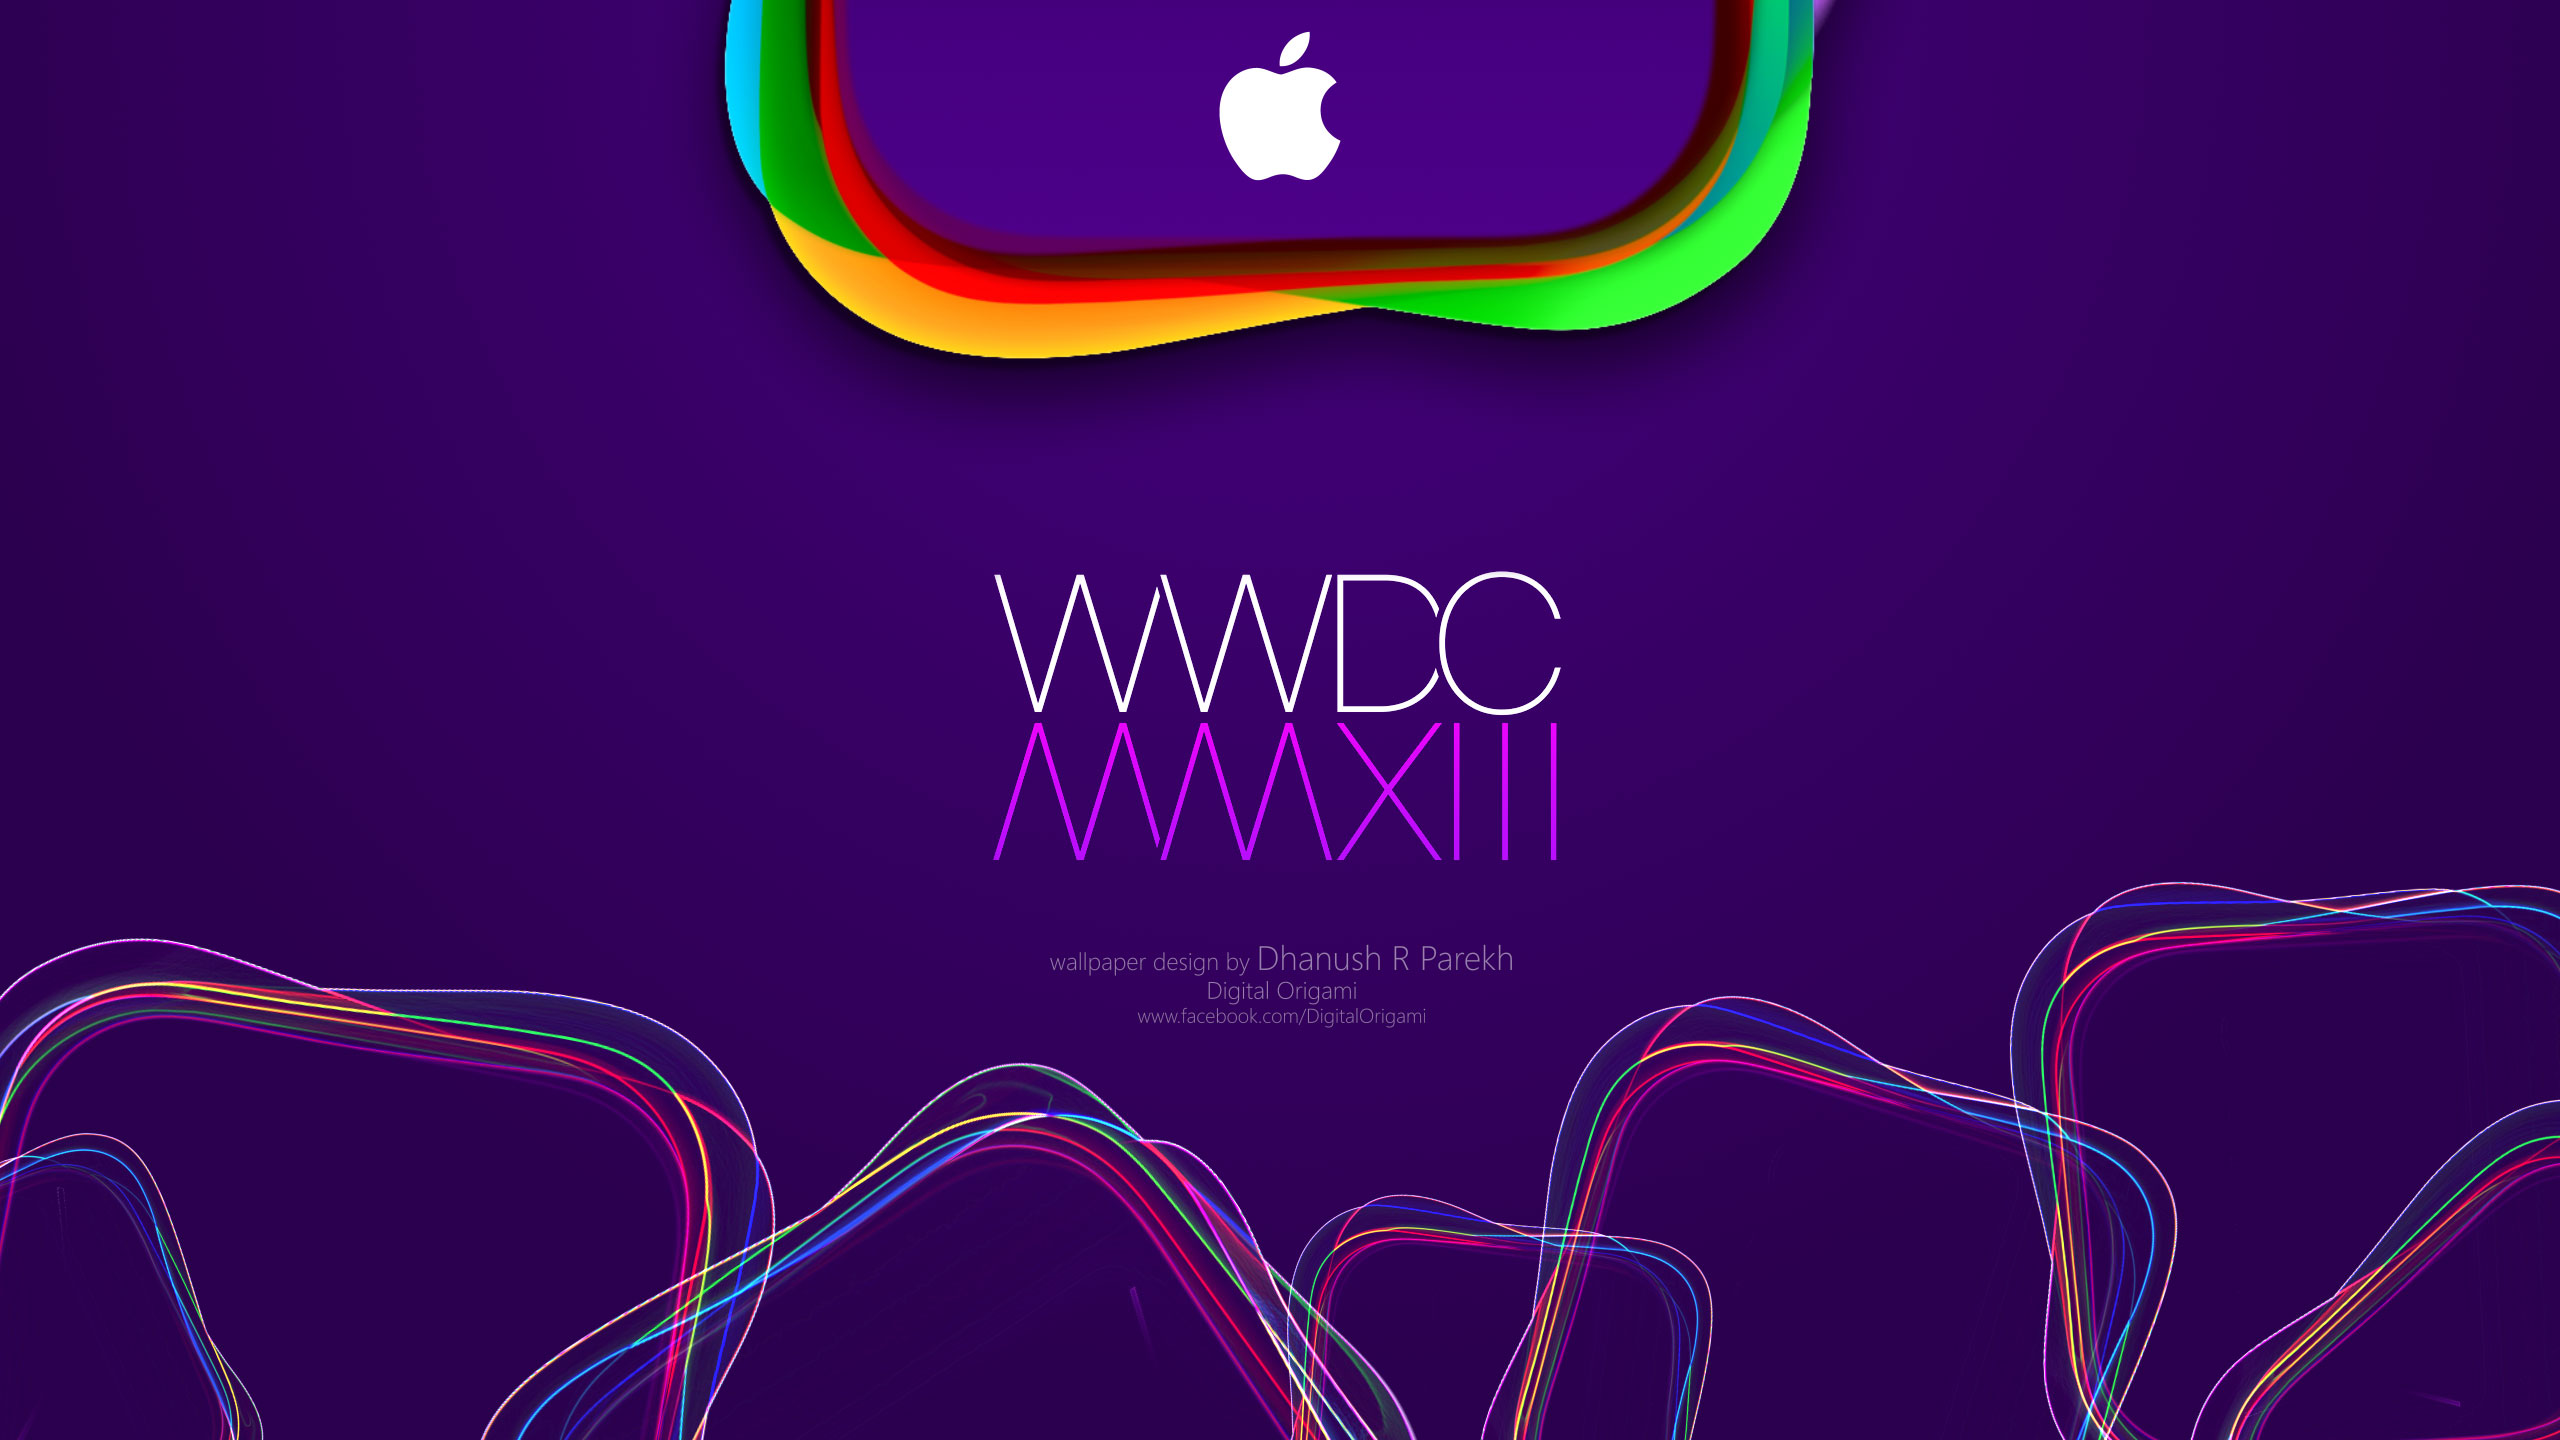 Apple WWDC 2013 wallpaper by DhanushParekh on DeviantArt